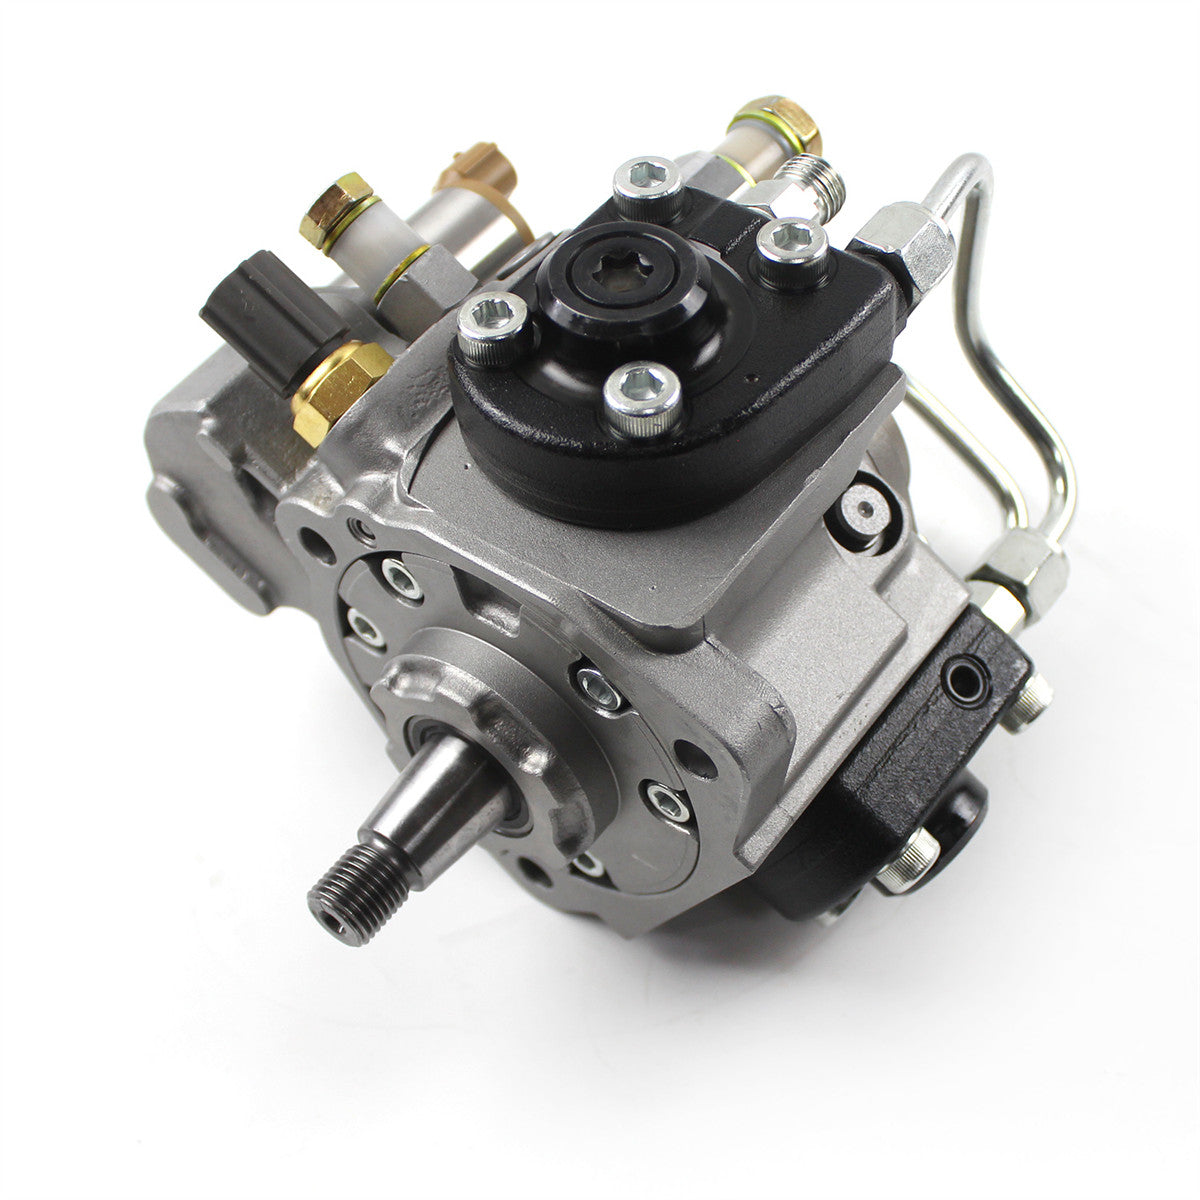 294050-0130 22100-E0020 Fuel Injection Pump for Kobelco SK350-8 - Sinocmp